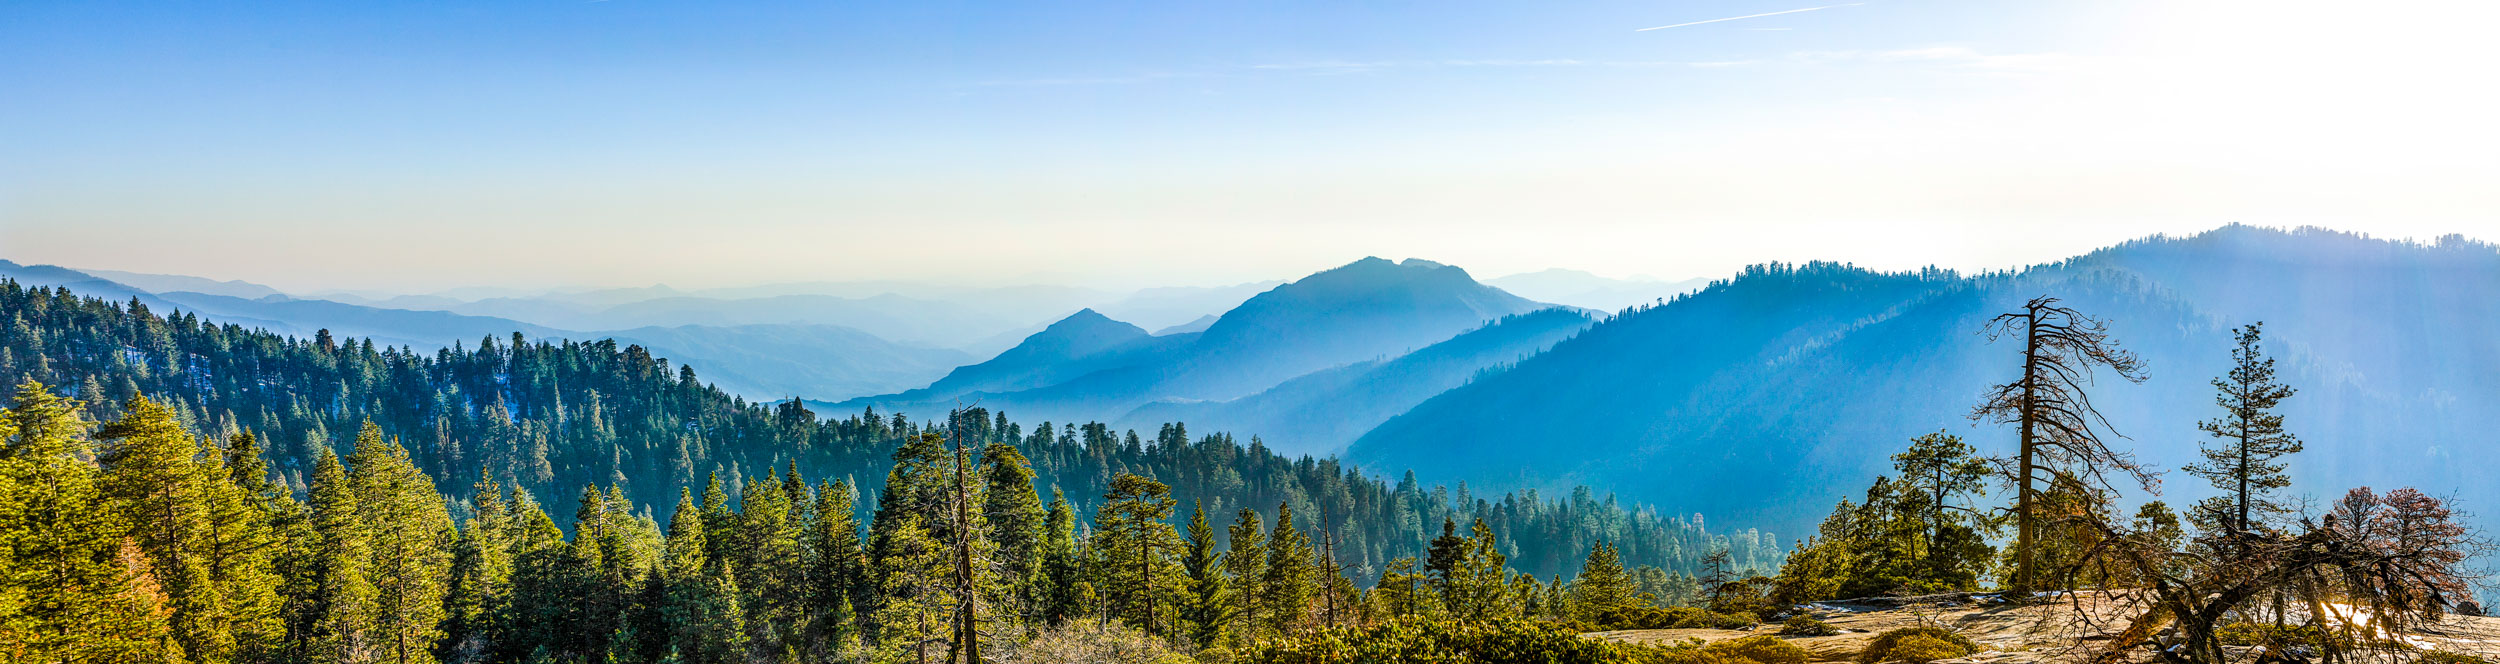 Sequoia Valley-1.jpg